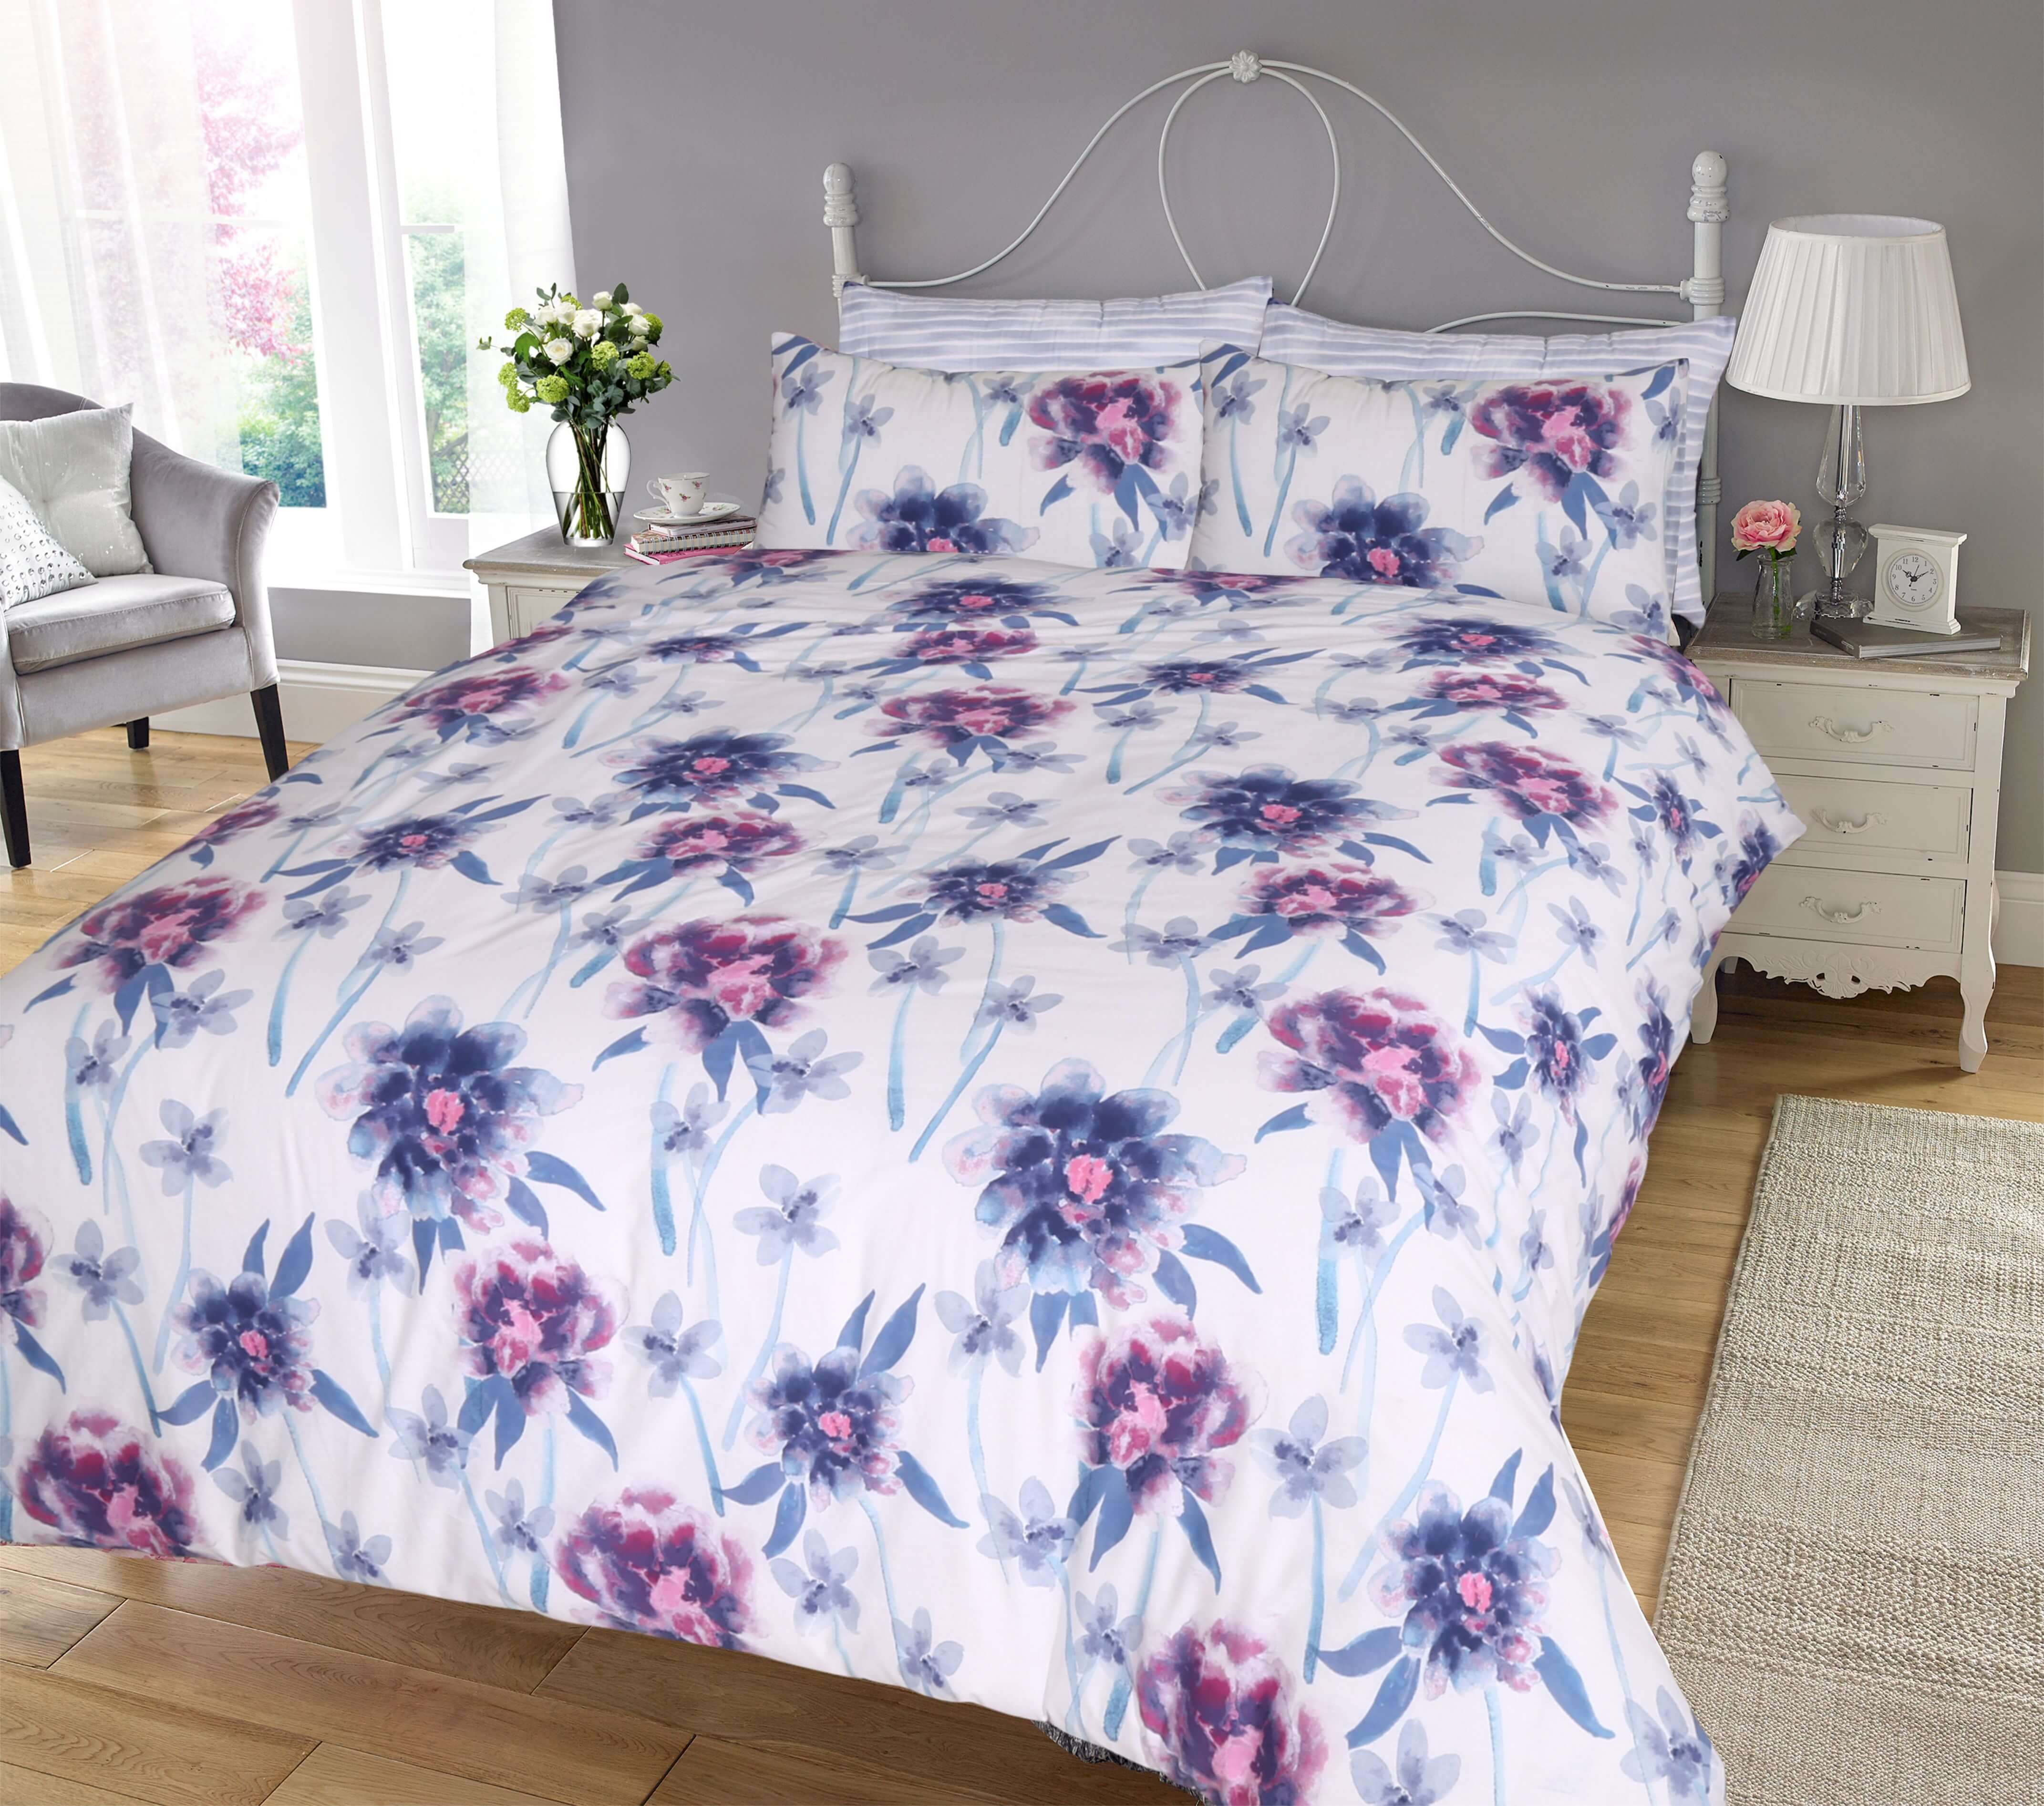 printed floral water blooms duvet cover set bedding